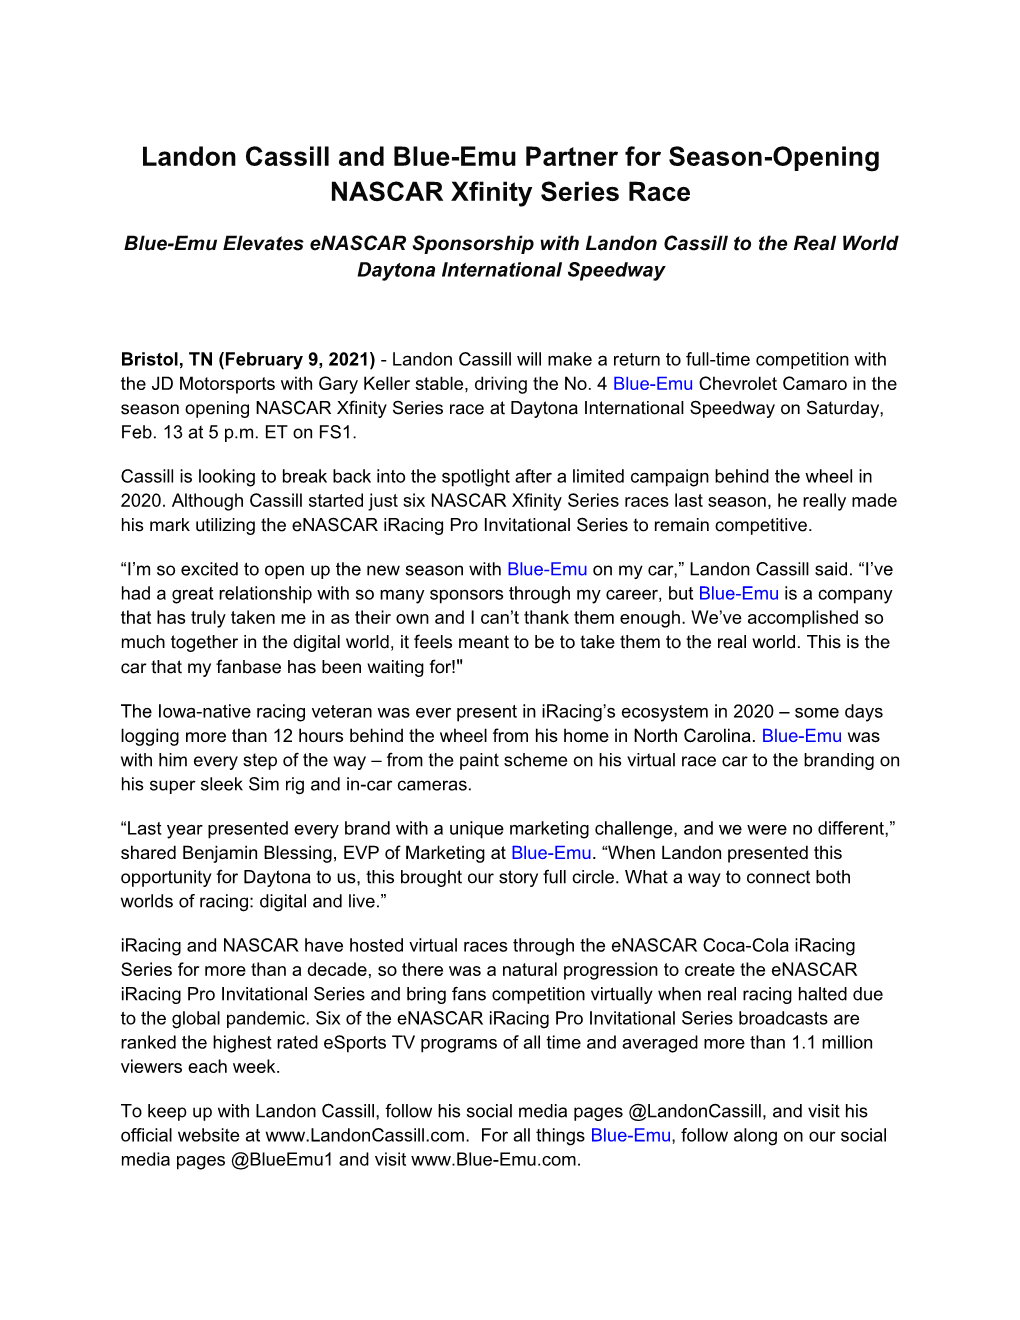 Landon Cassill and Blue-Emu Partner for Season-Opening NASCAR Xfinity Series Race